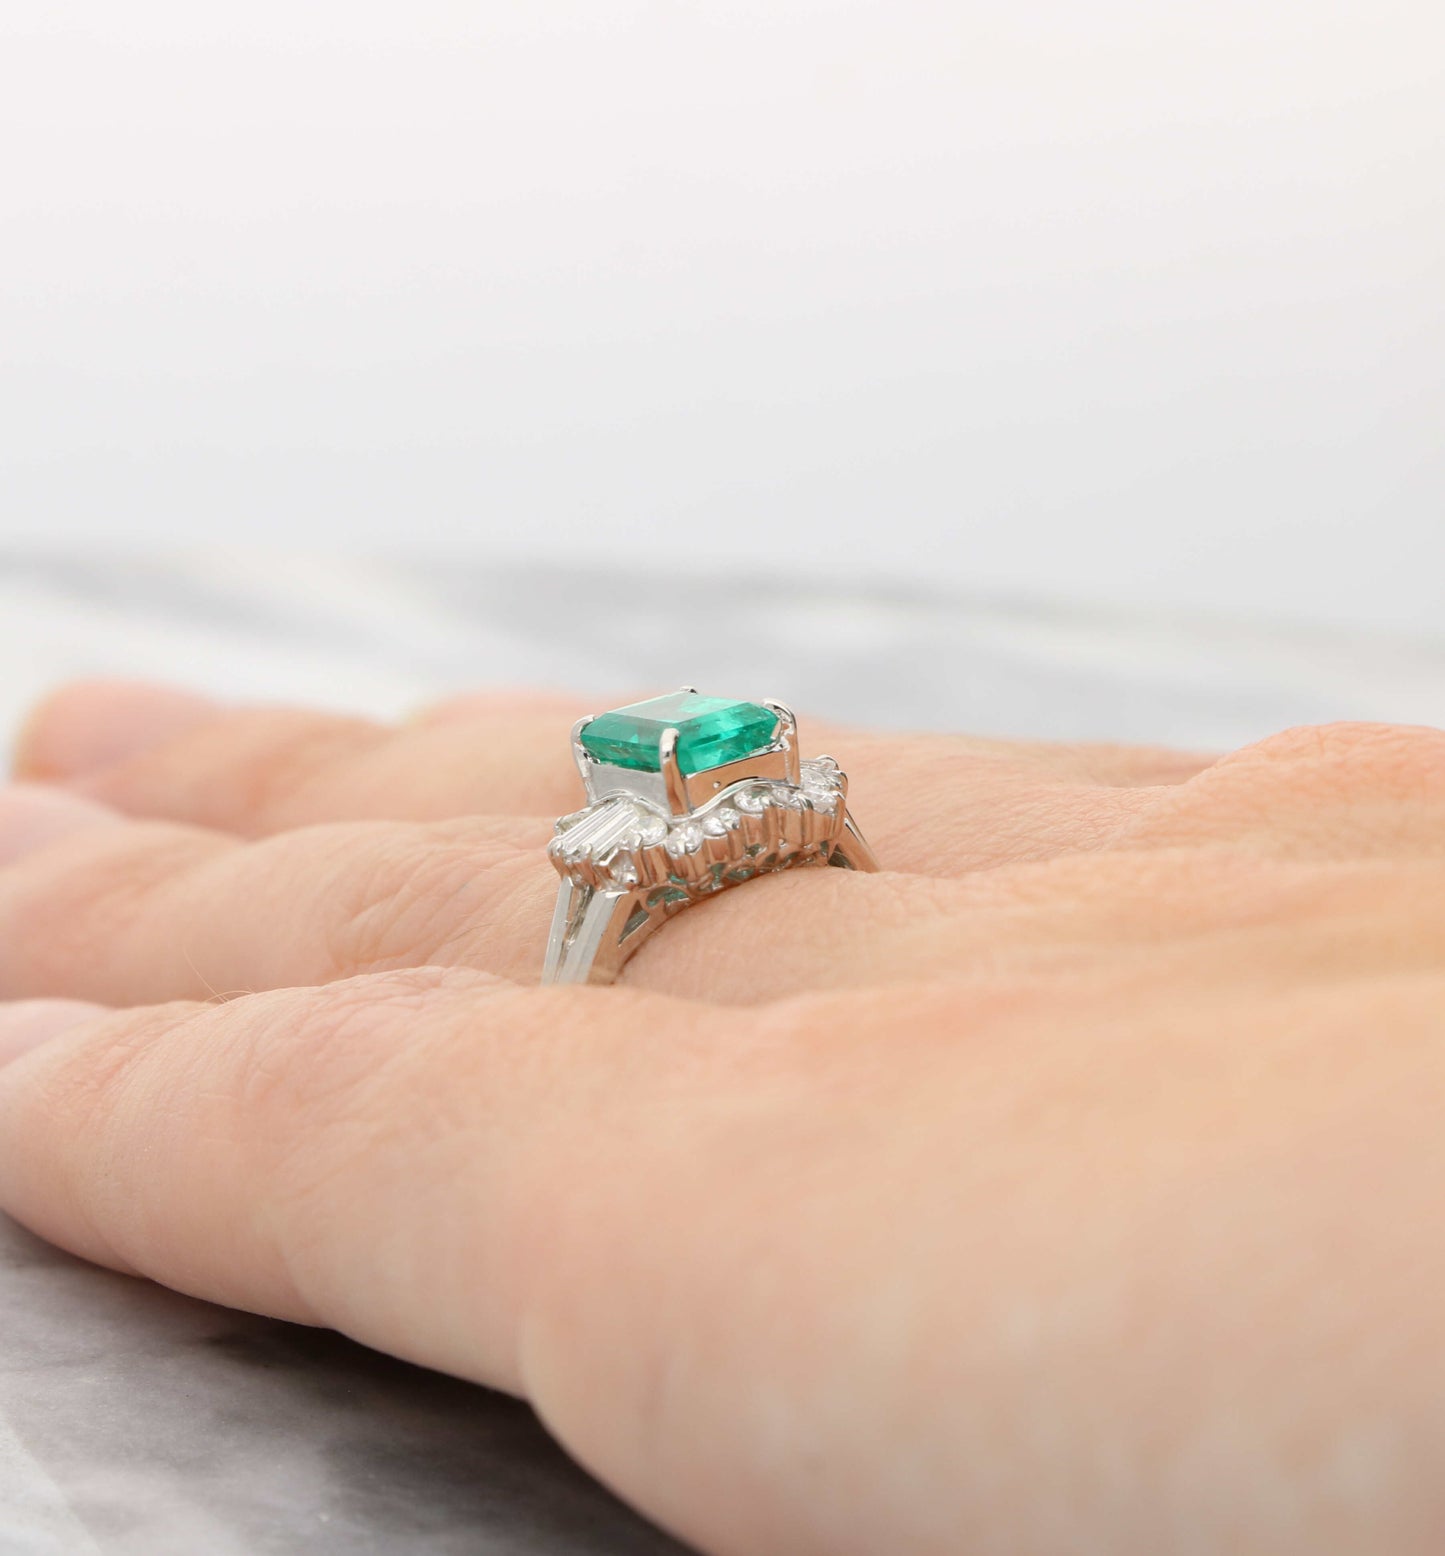 Platinum emerald and diamond cluster ring